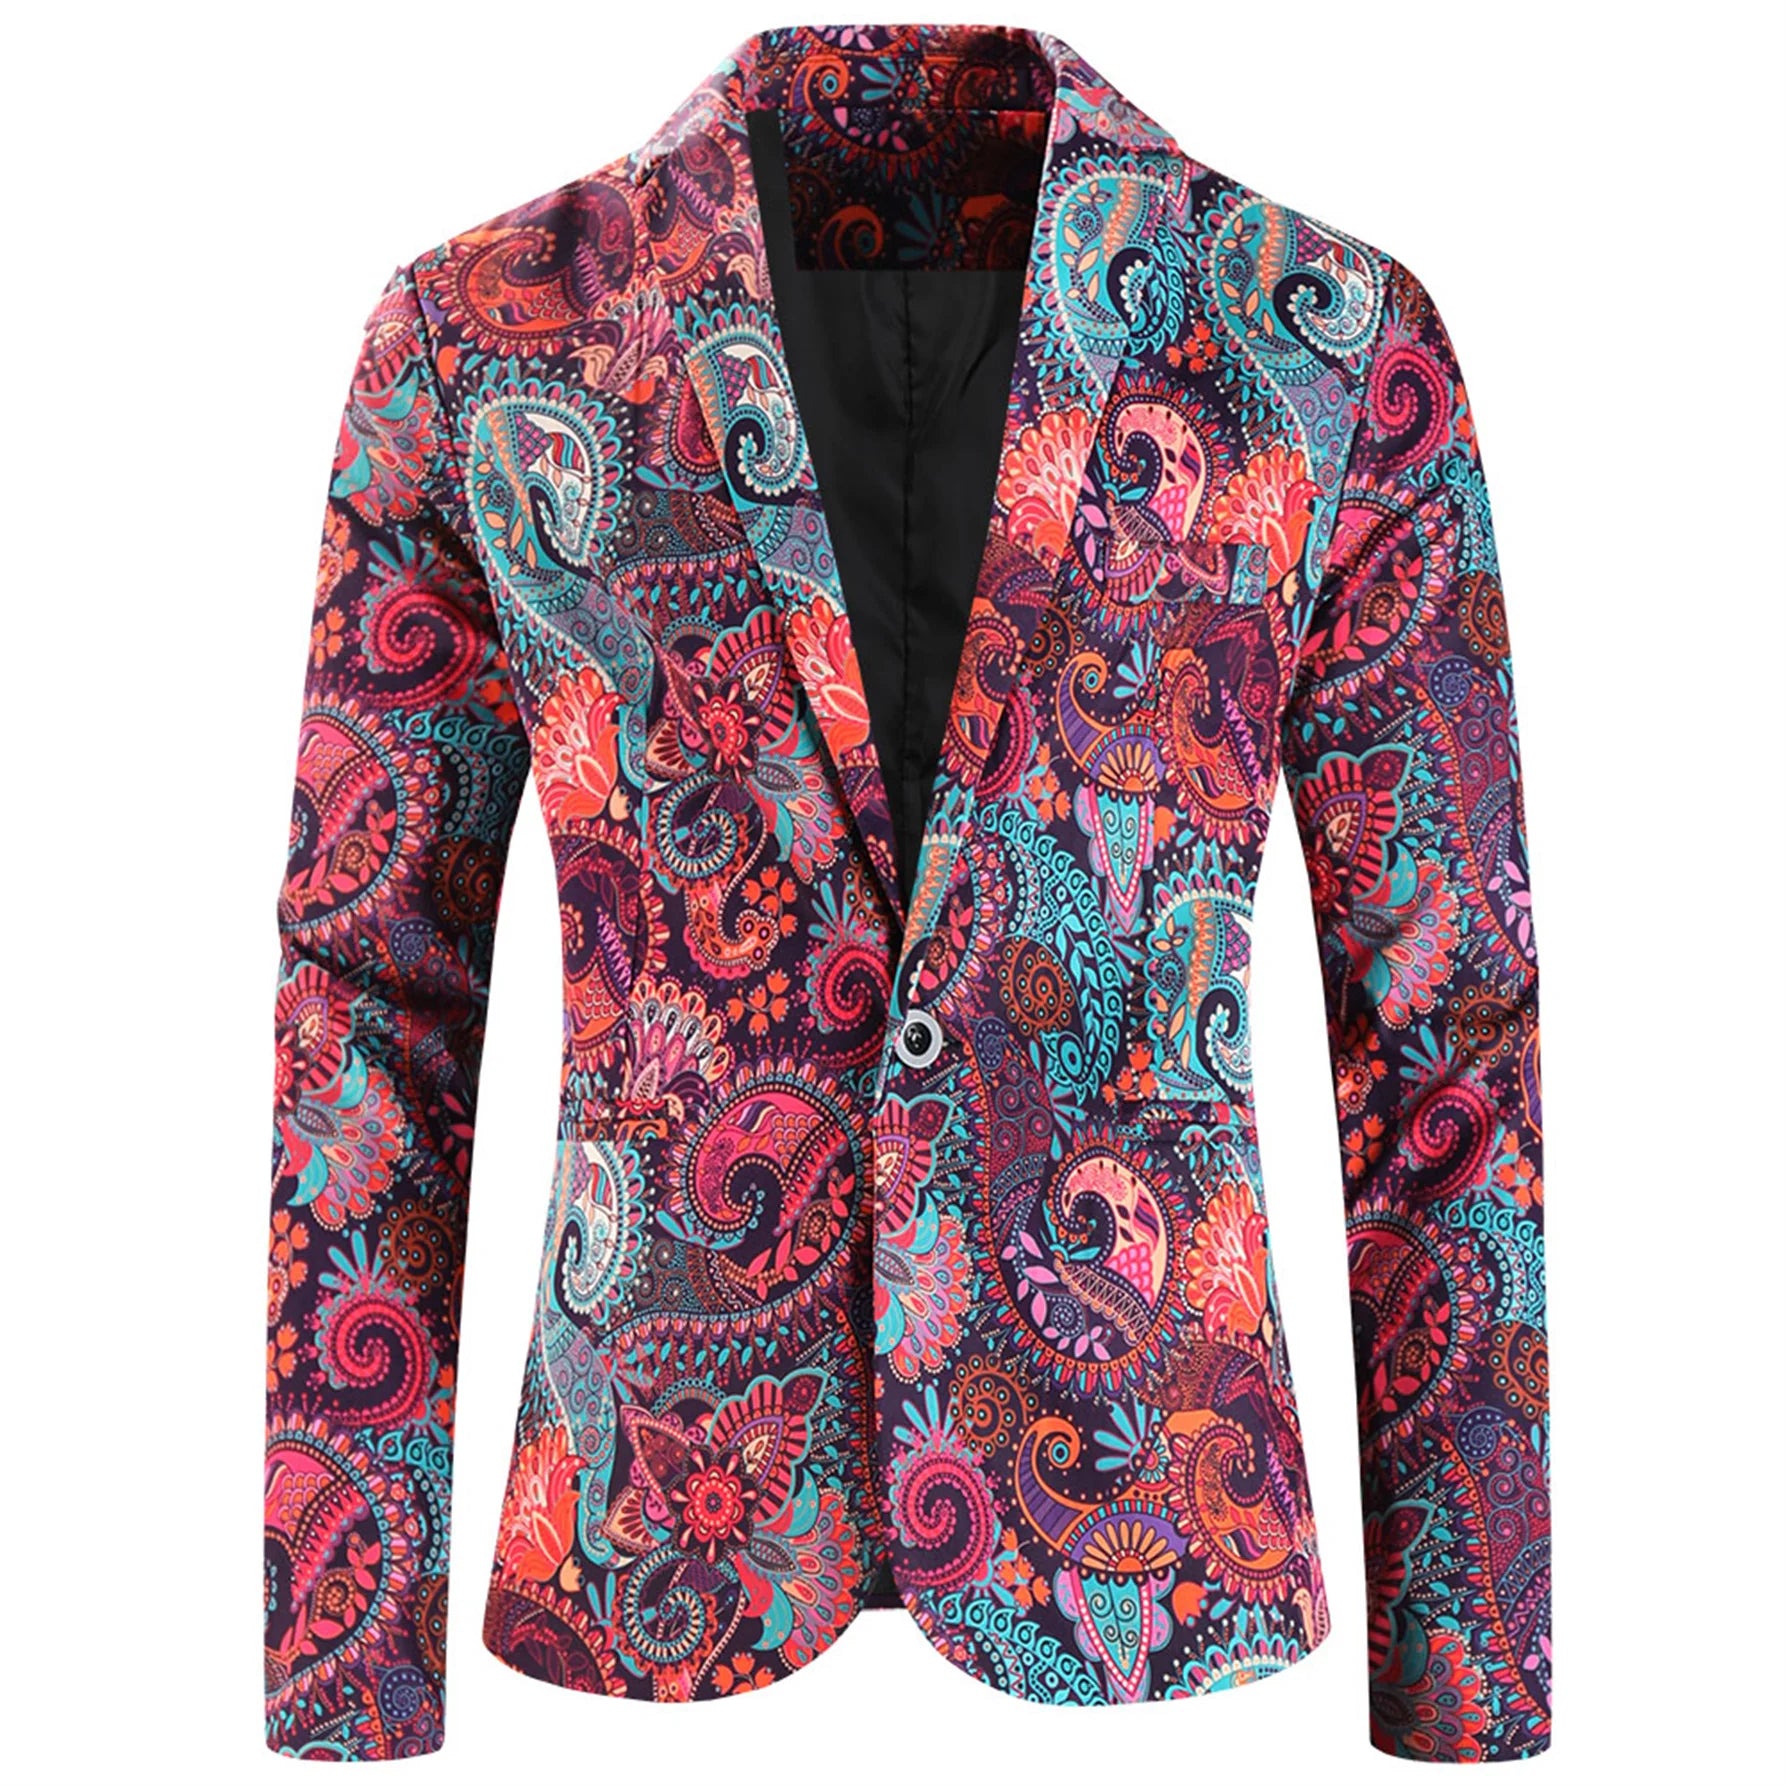 Men's Fashion Colorful Paisley Pattern Blazer, Casual Long Sleeve One Button Lapel Suit Jacket, Slim Fit Dress Coat For Party/Fo